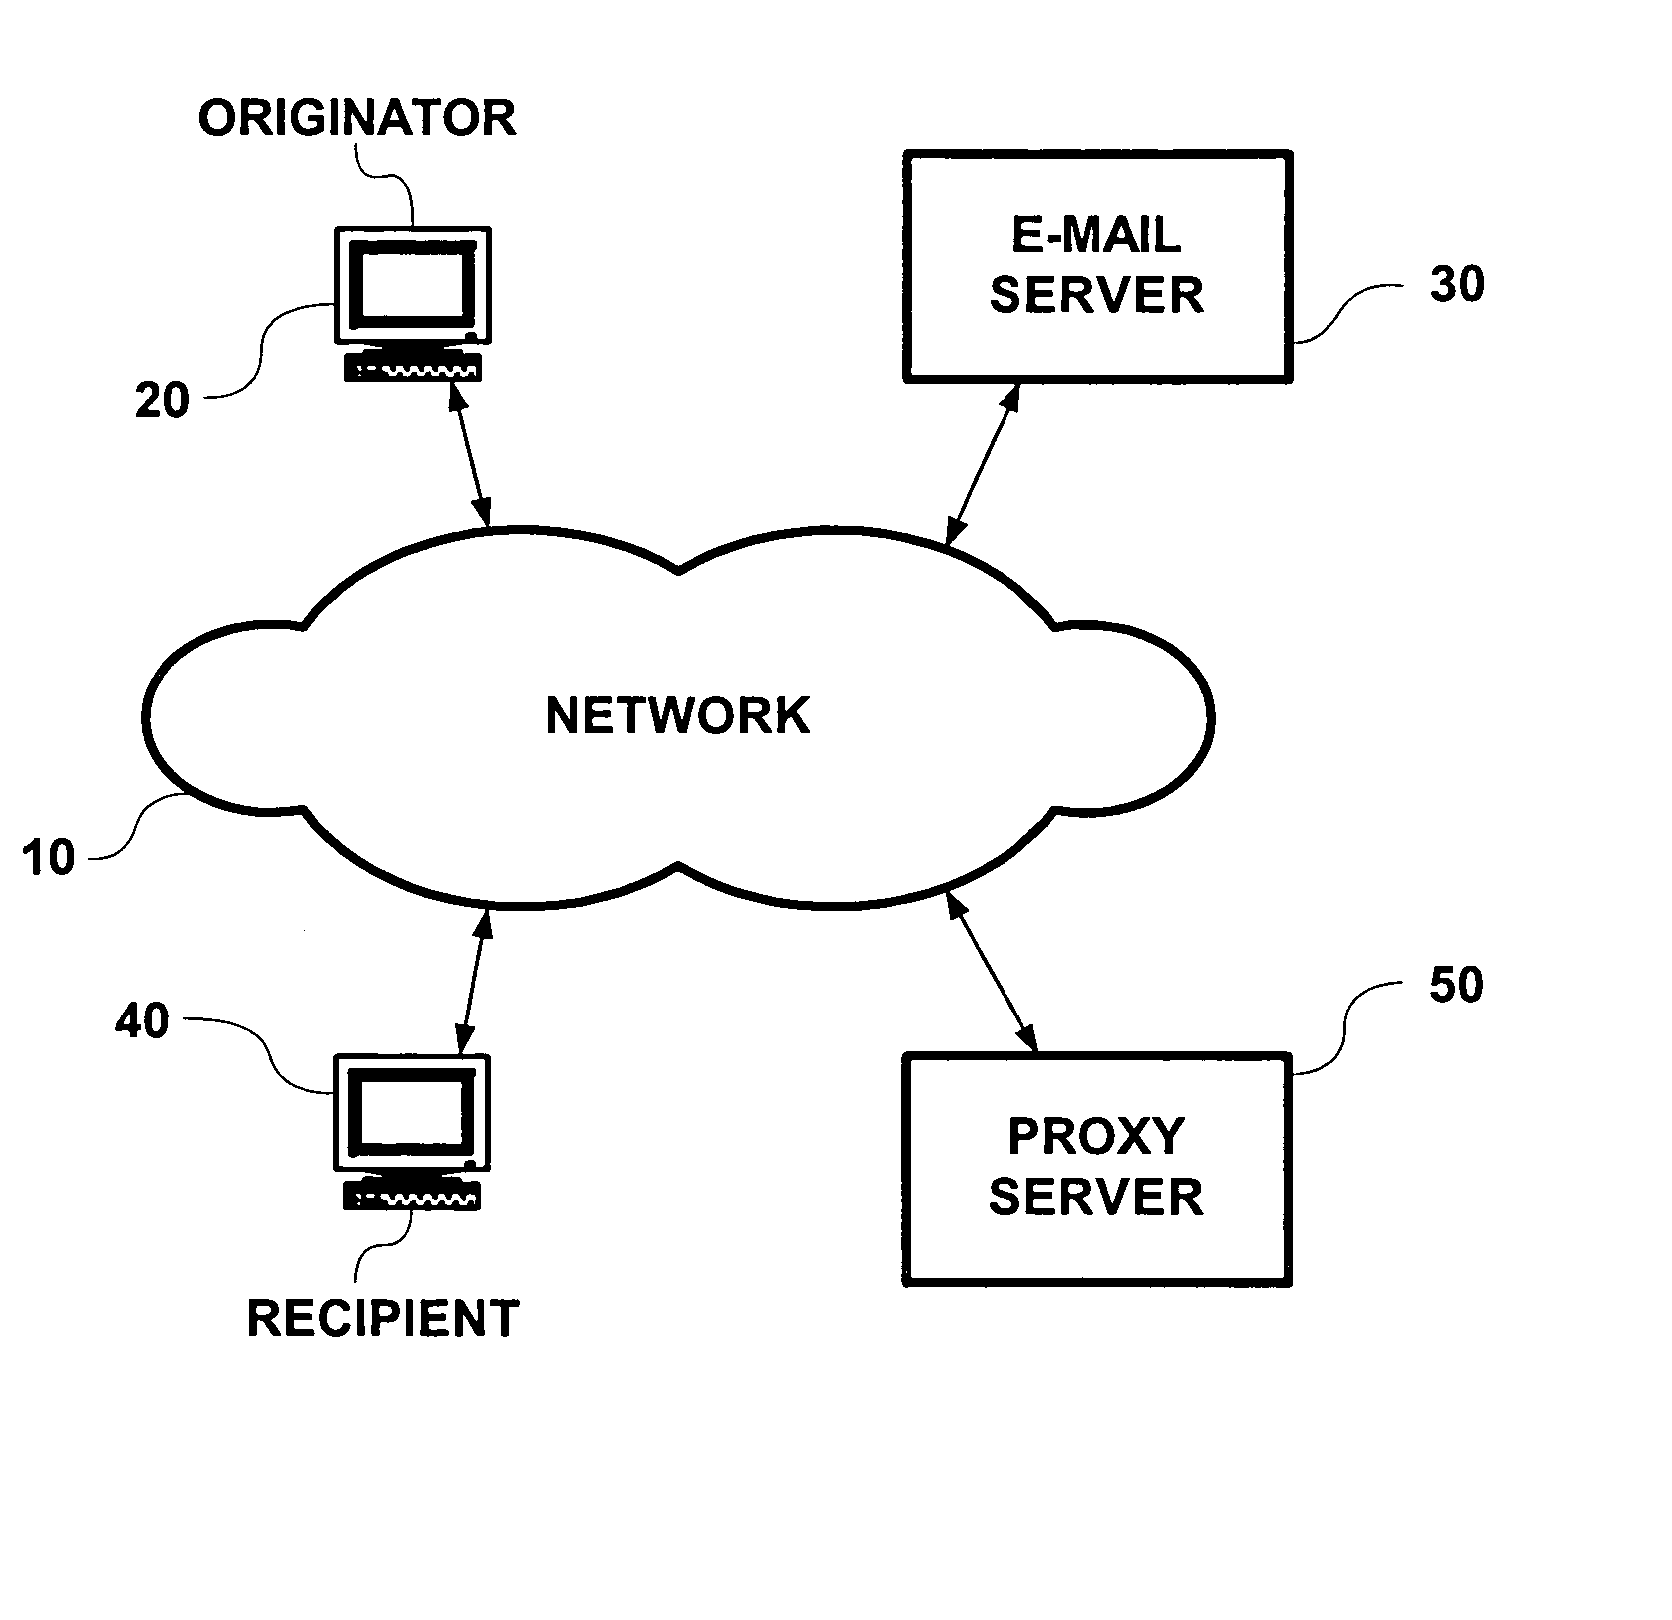 Reduction of network server loading